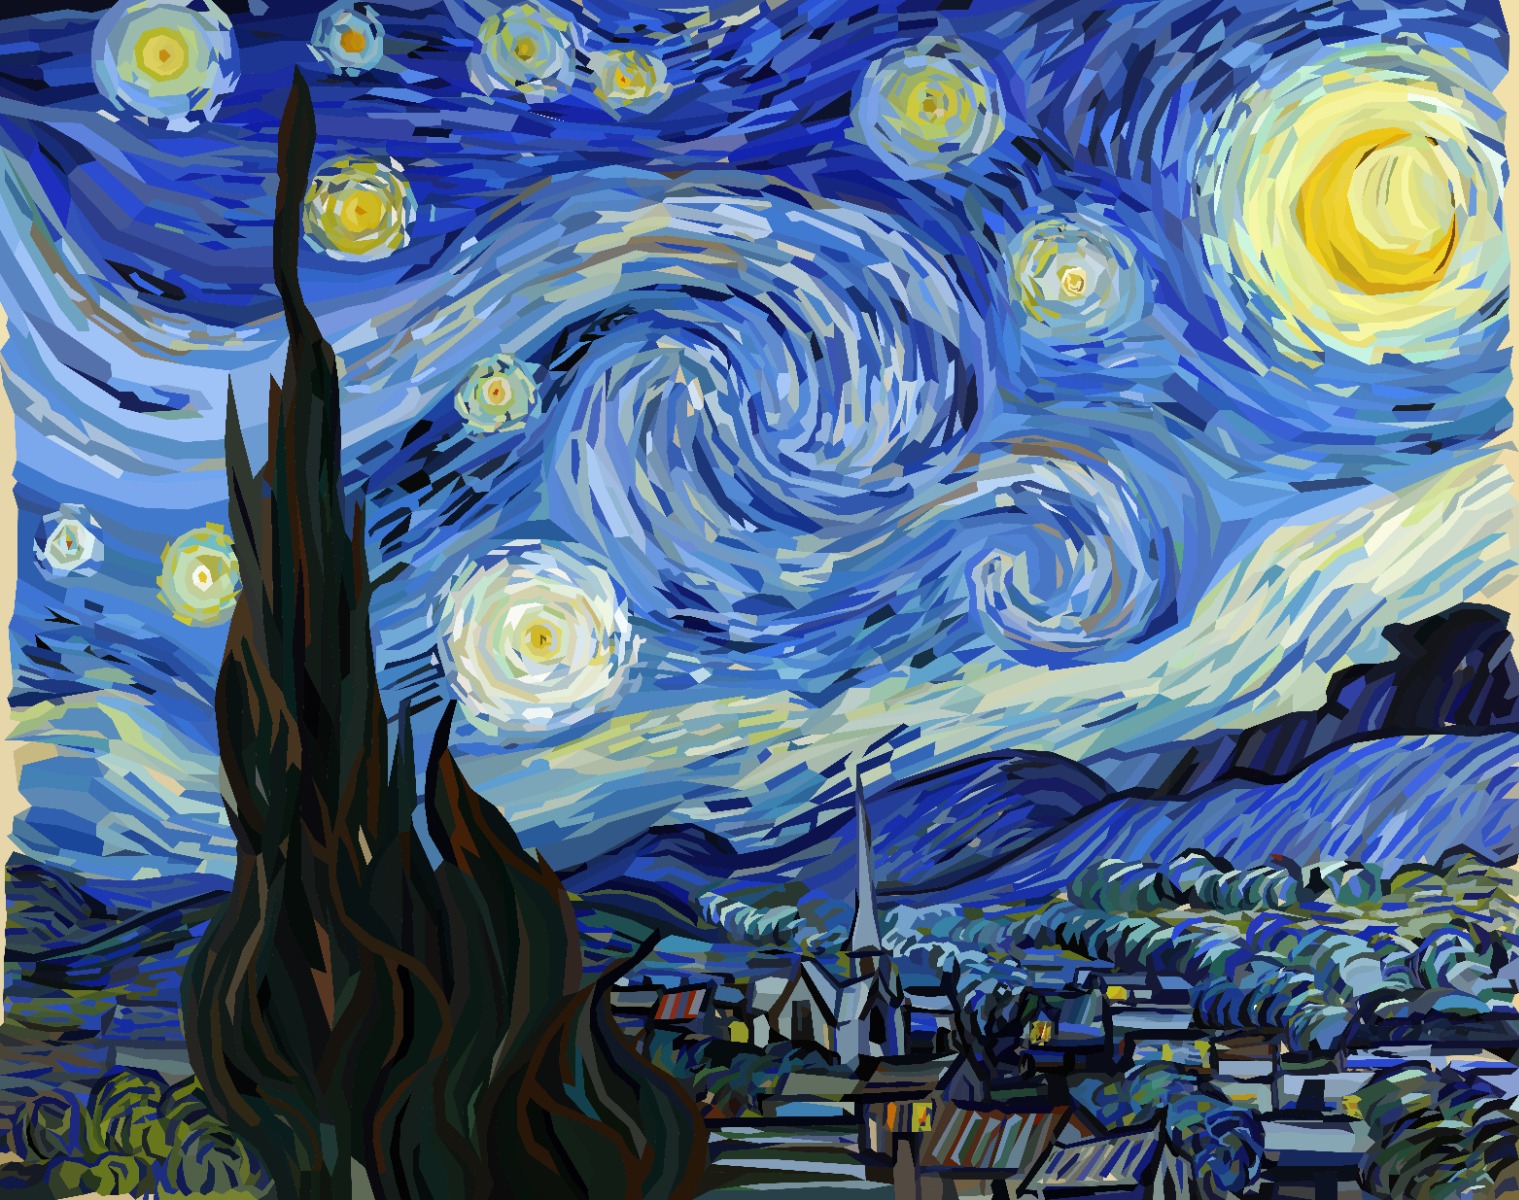 100+] Van Gogh Wallpapers | Wallpapers.com